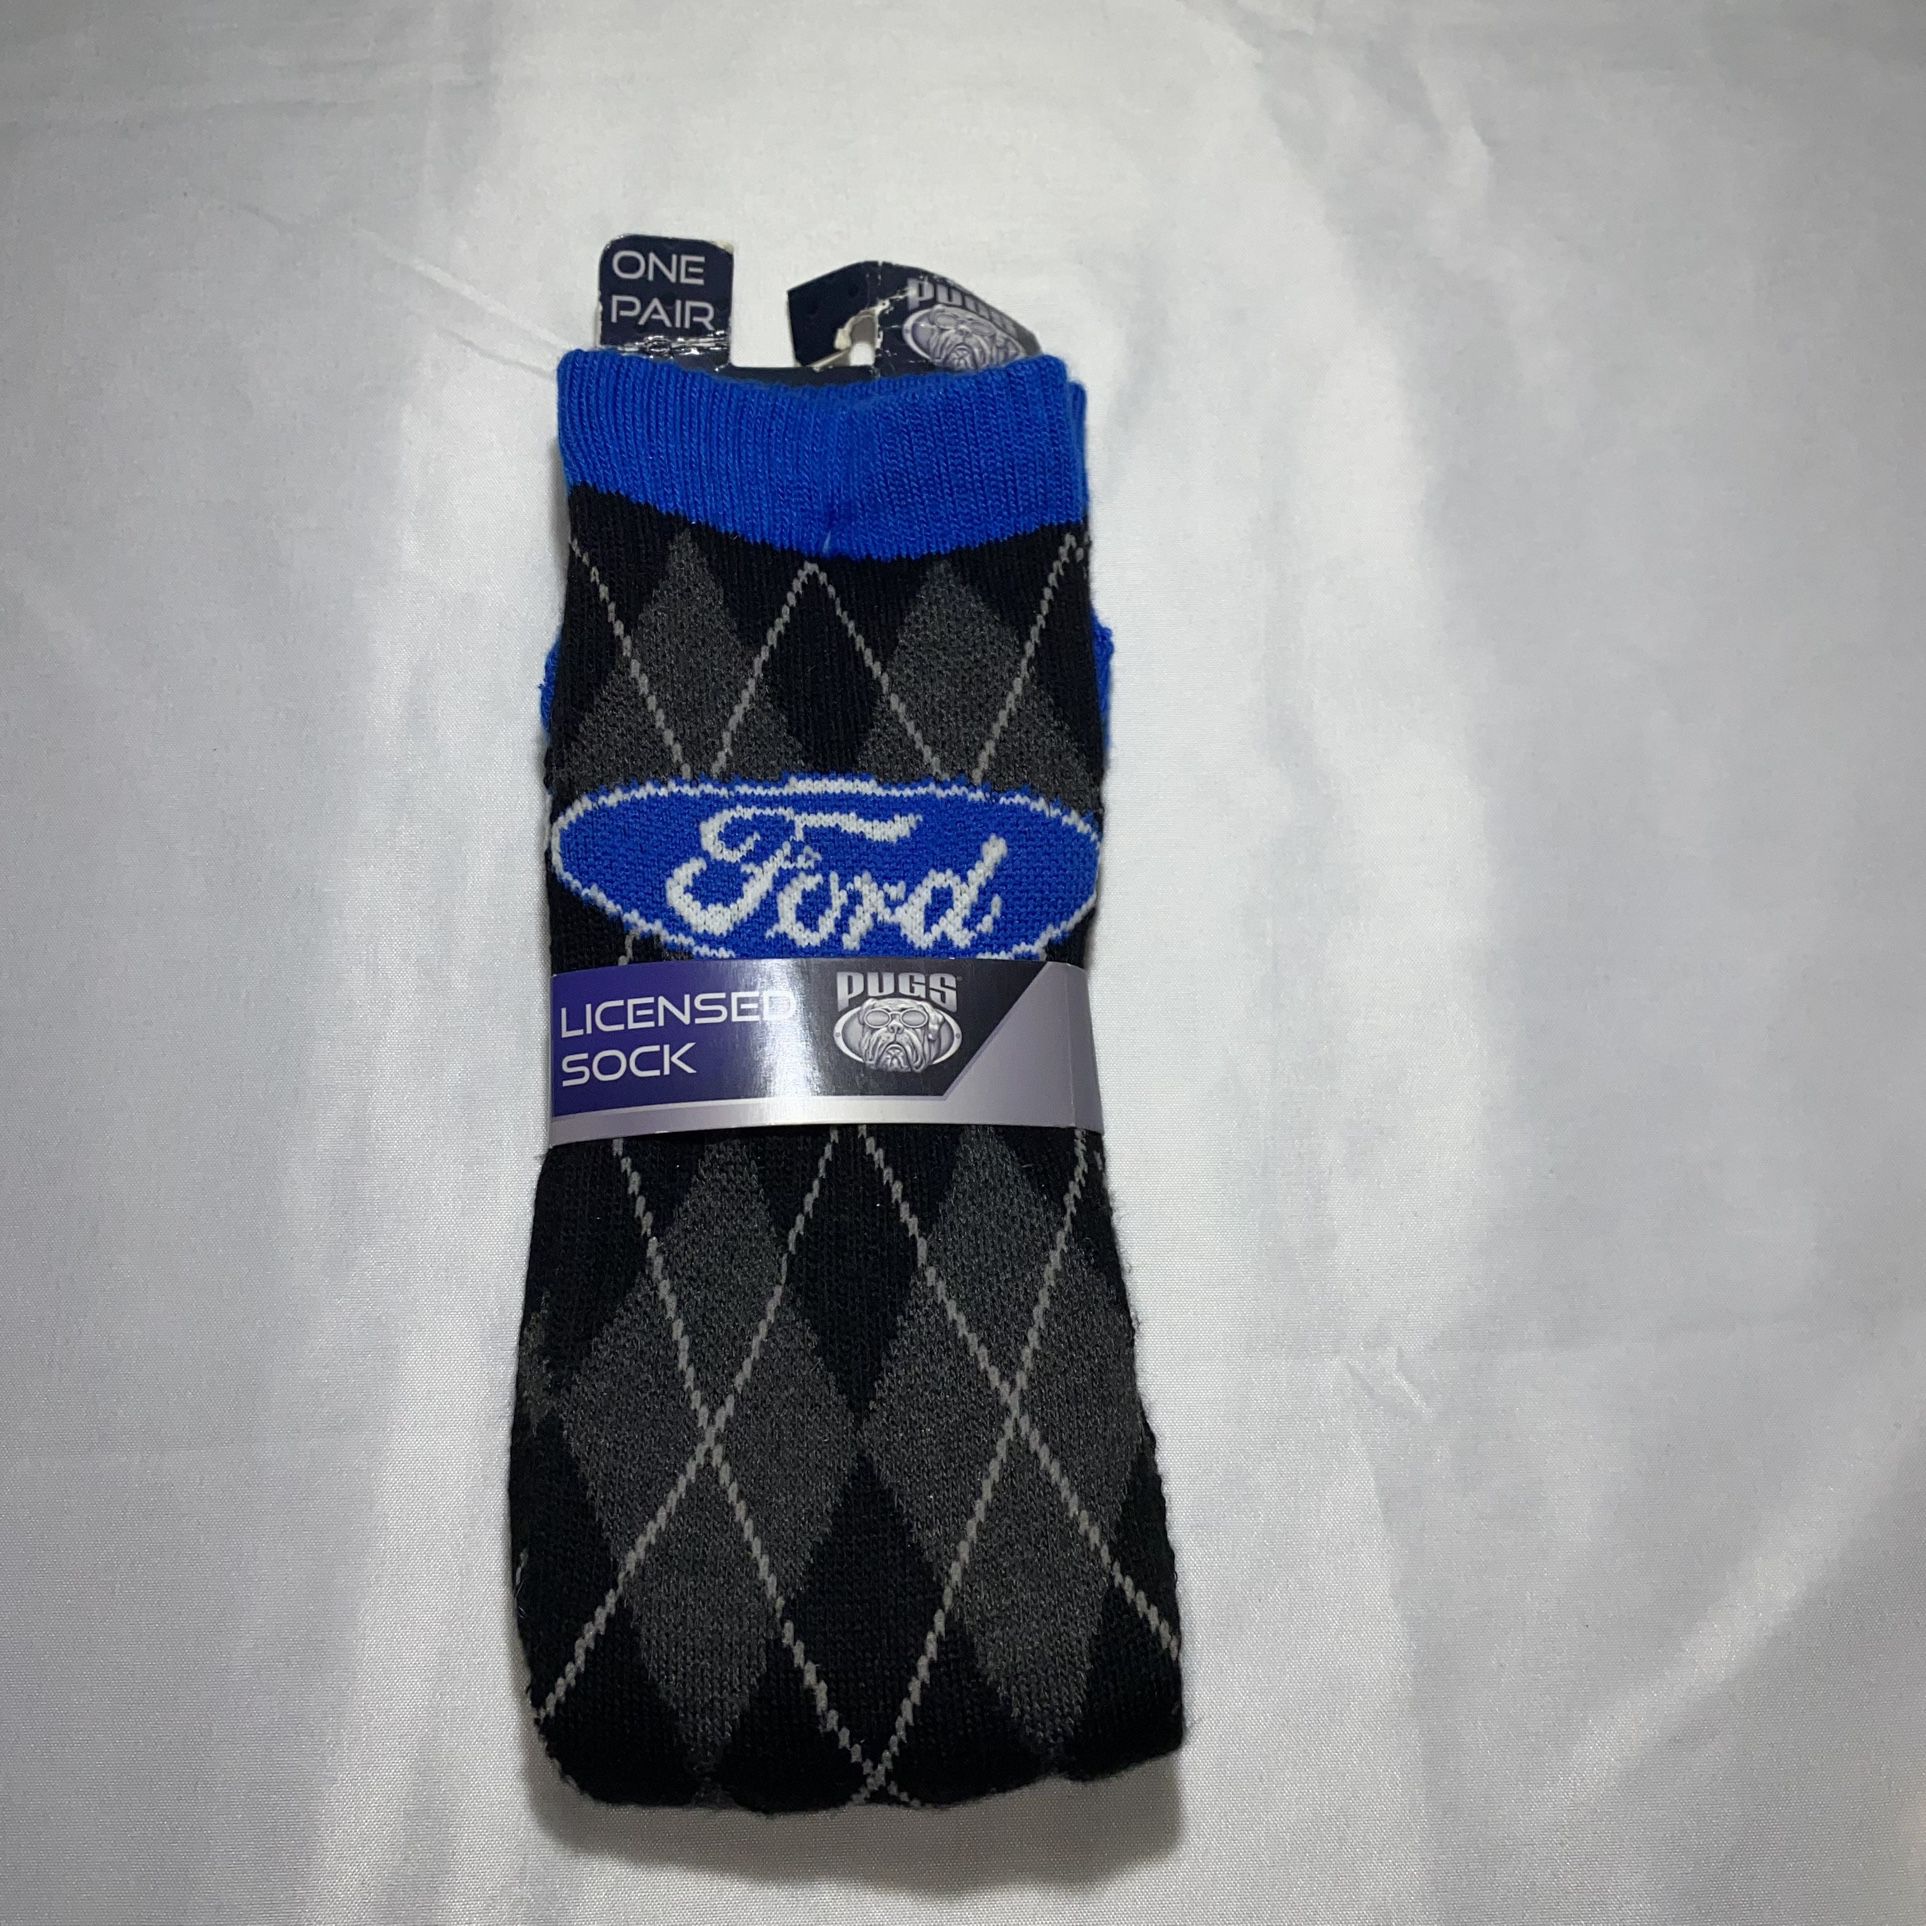 Ford Socks $10